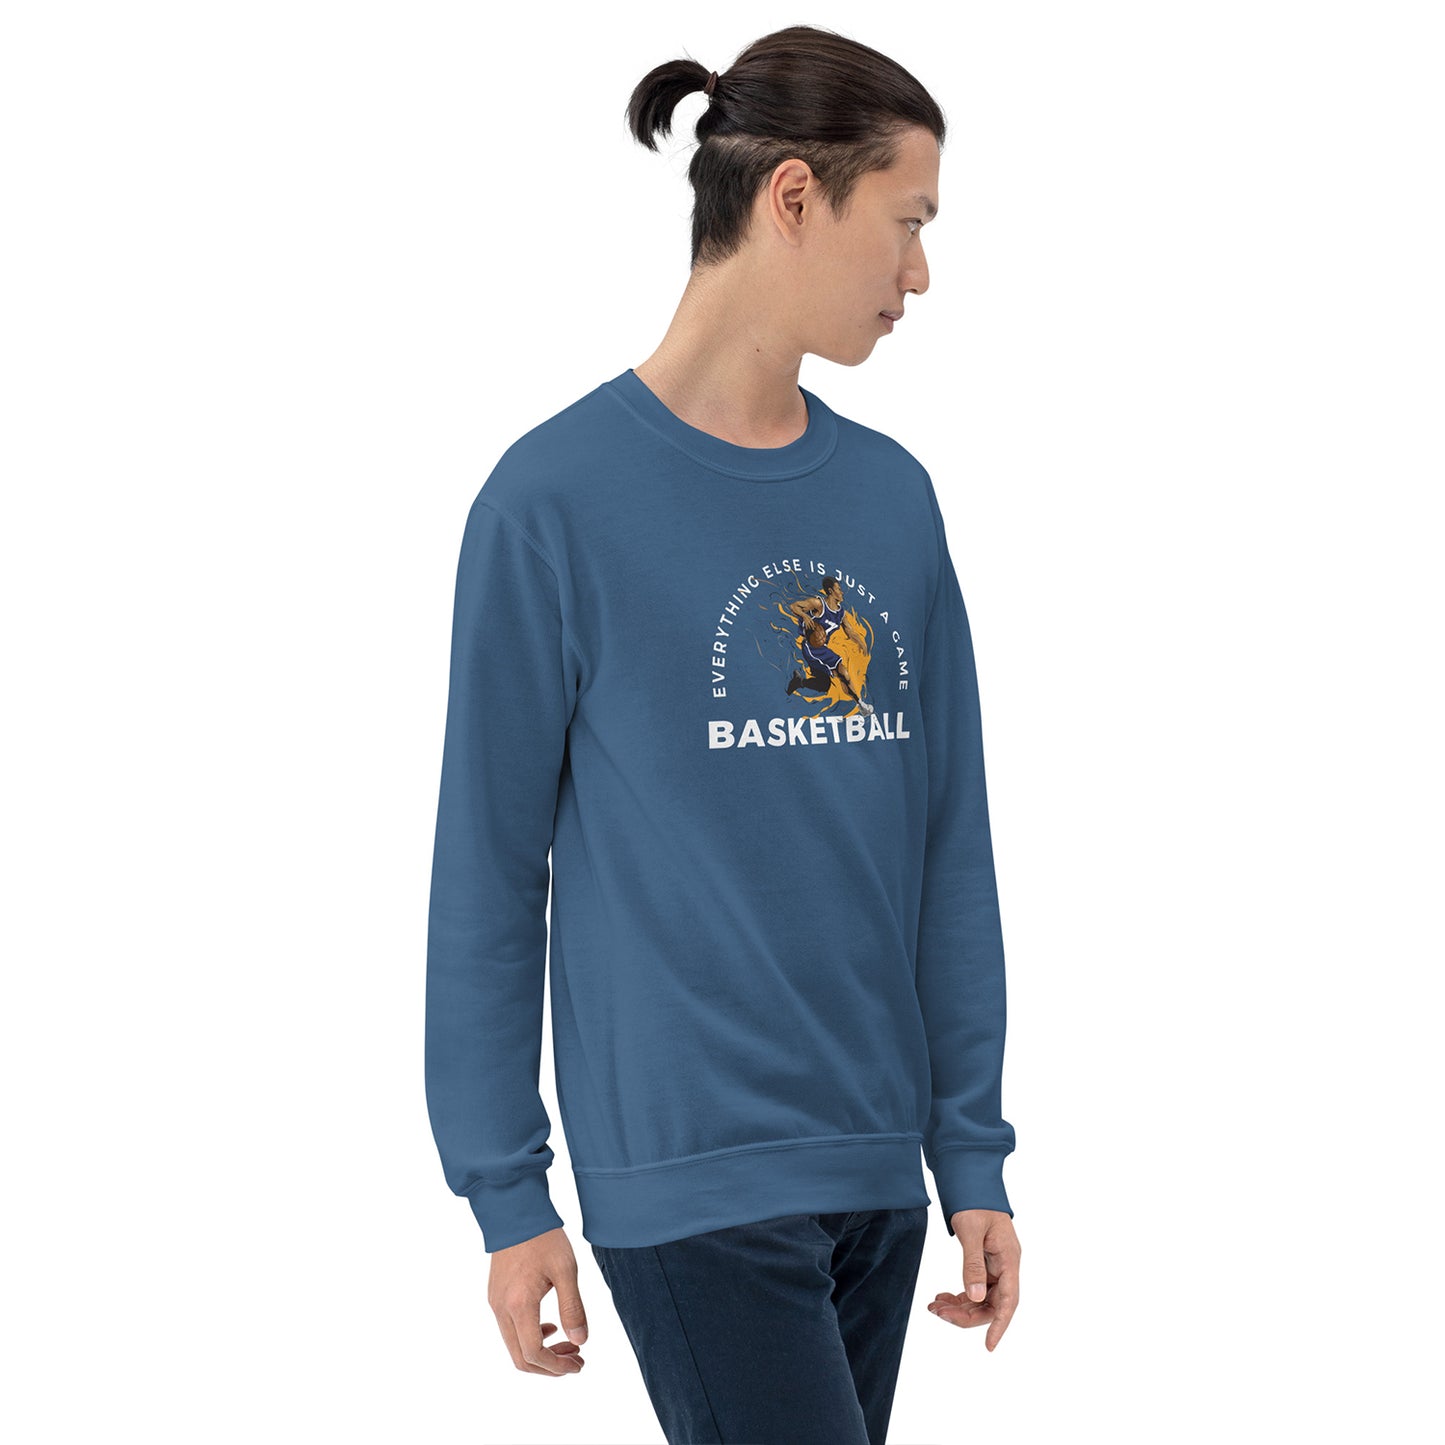 Men's Basketball Inspired Sweatshirt